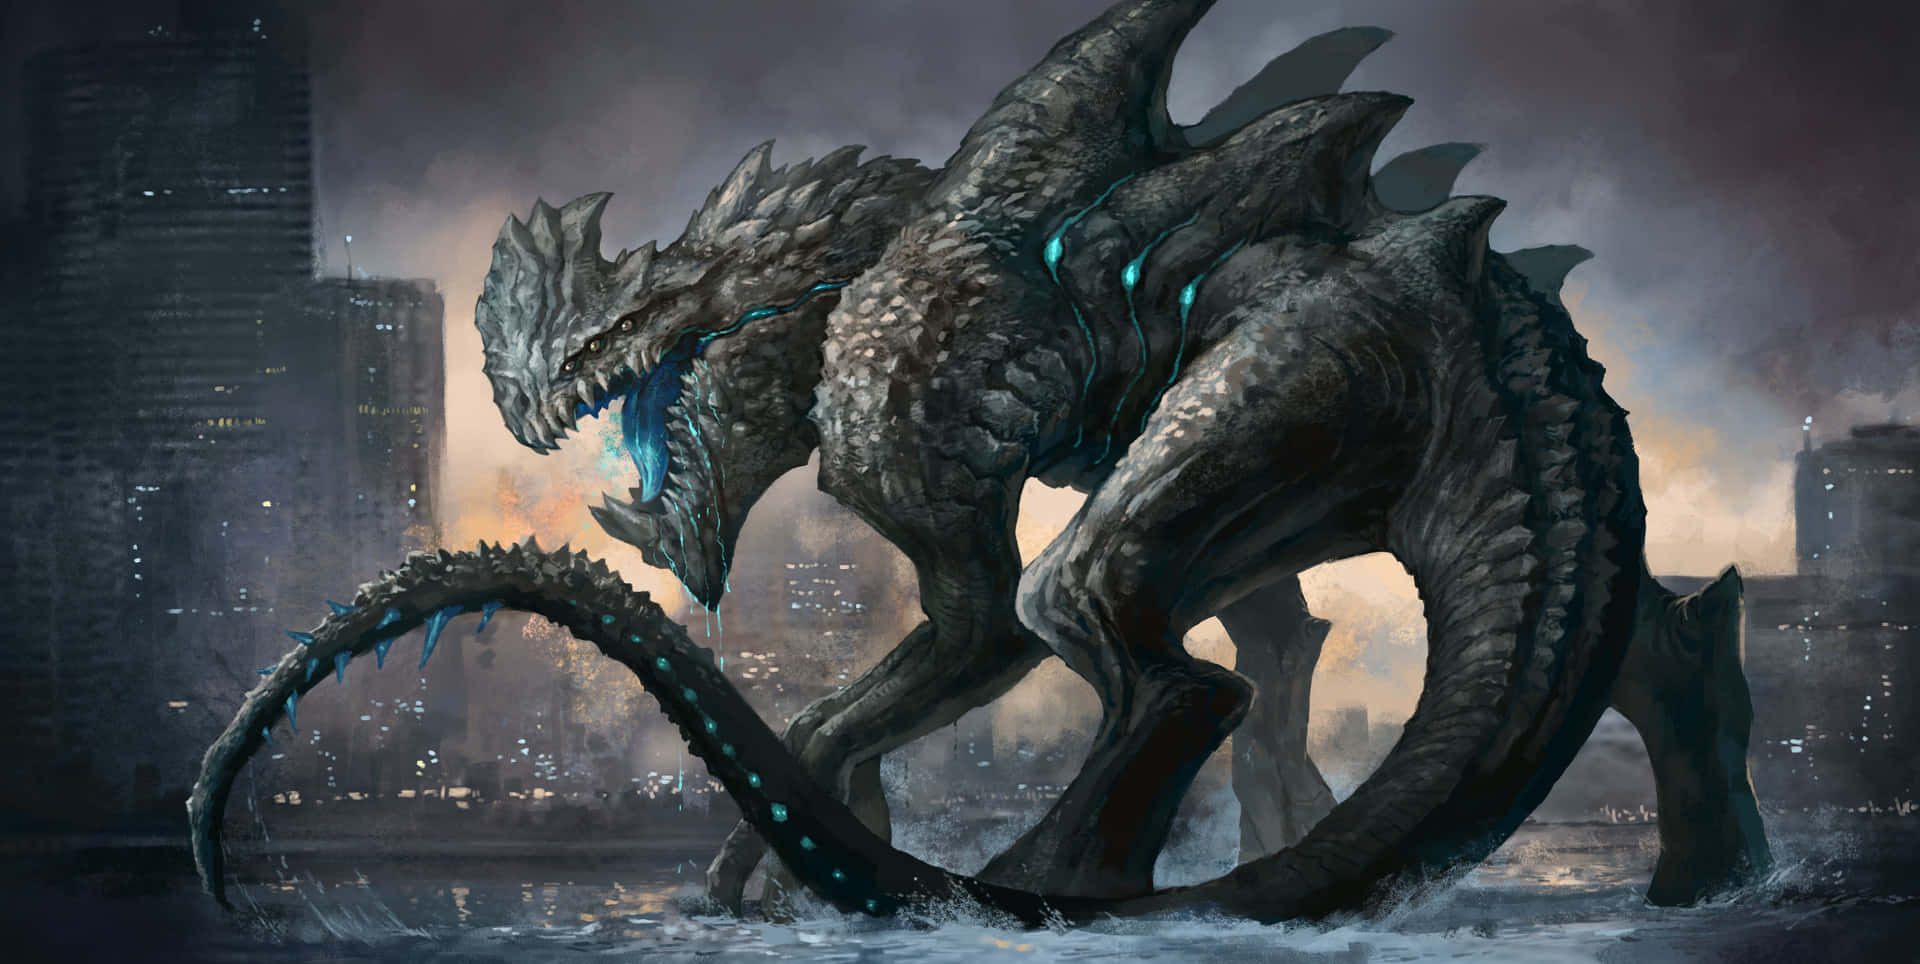 An epic battle unfolds between colossal Kaiju monsters in a city under siege. Wallpaper